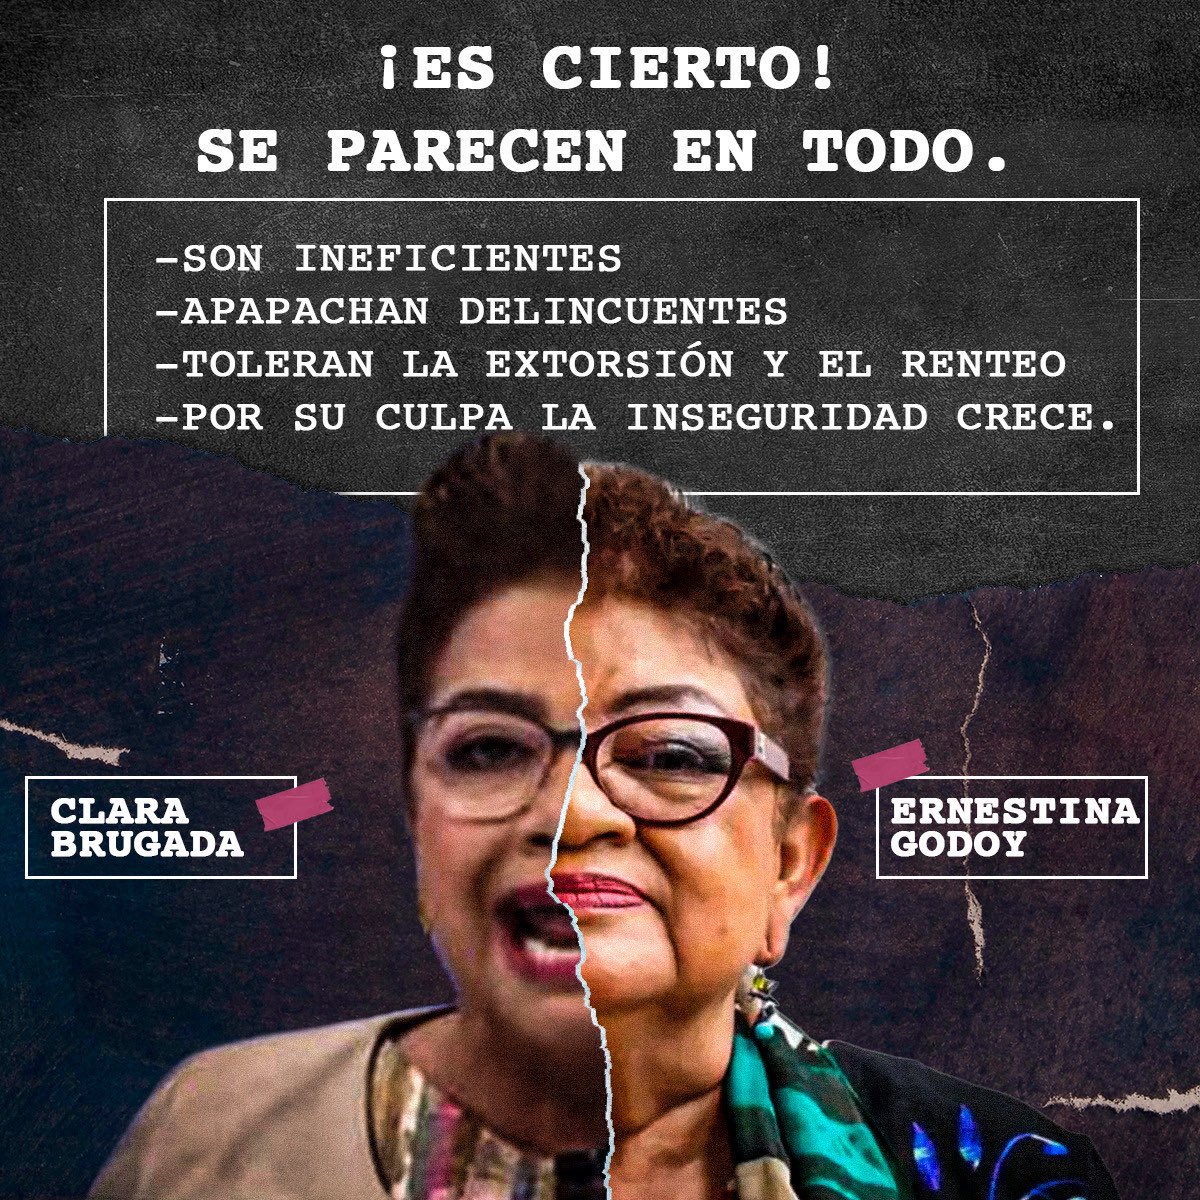 Jajajaj encuentra las diferencias. 🤣🤣🤣

#ClaraCorrupta #MorenaPierdeCDMX